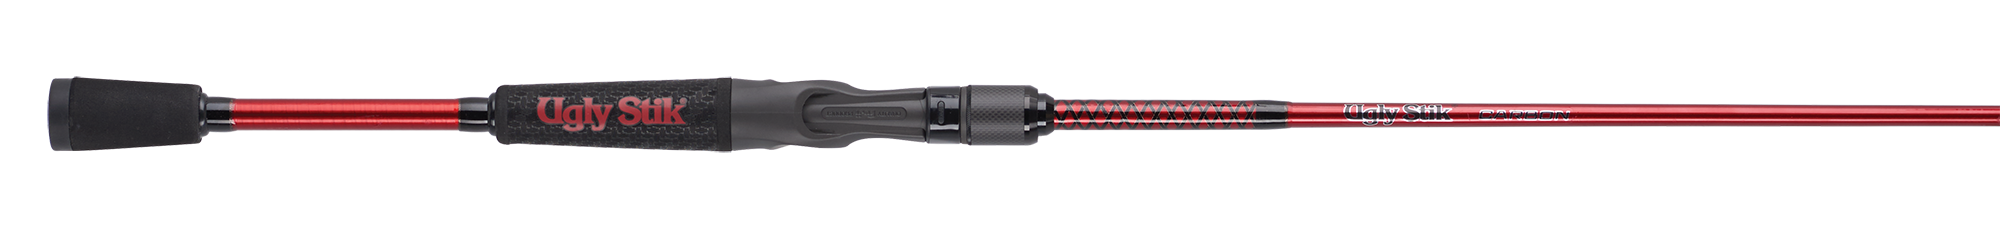 Meet the Ugly Stik Carbon Rod - The lightest Ugly Stik Rod EVER!